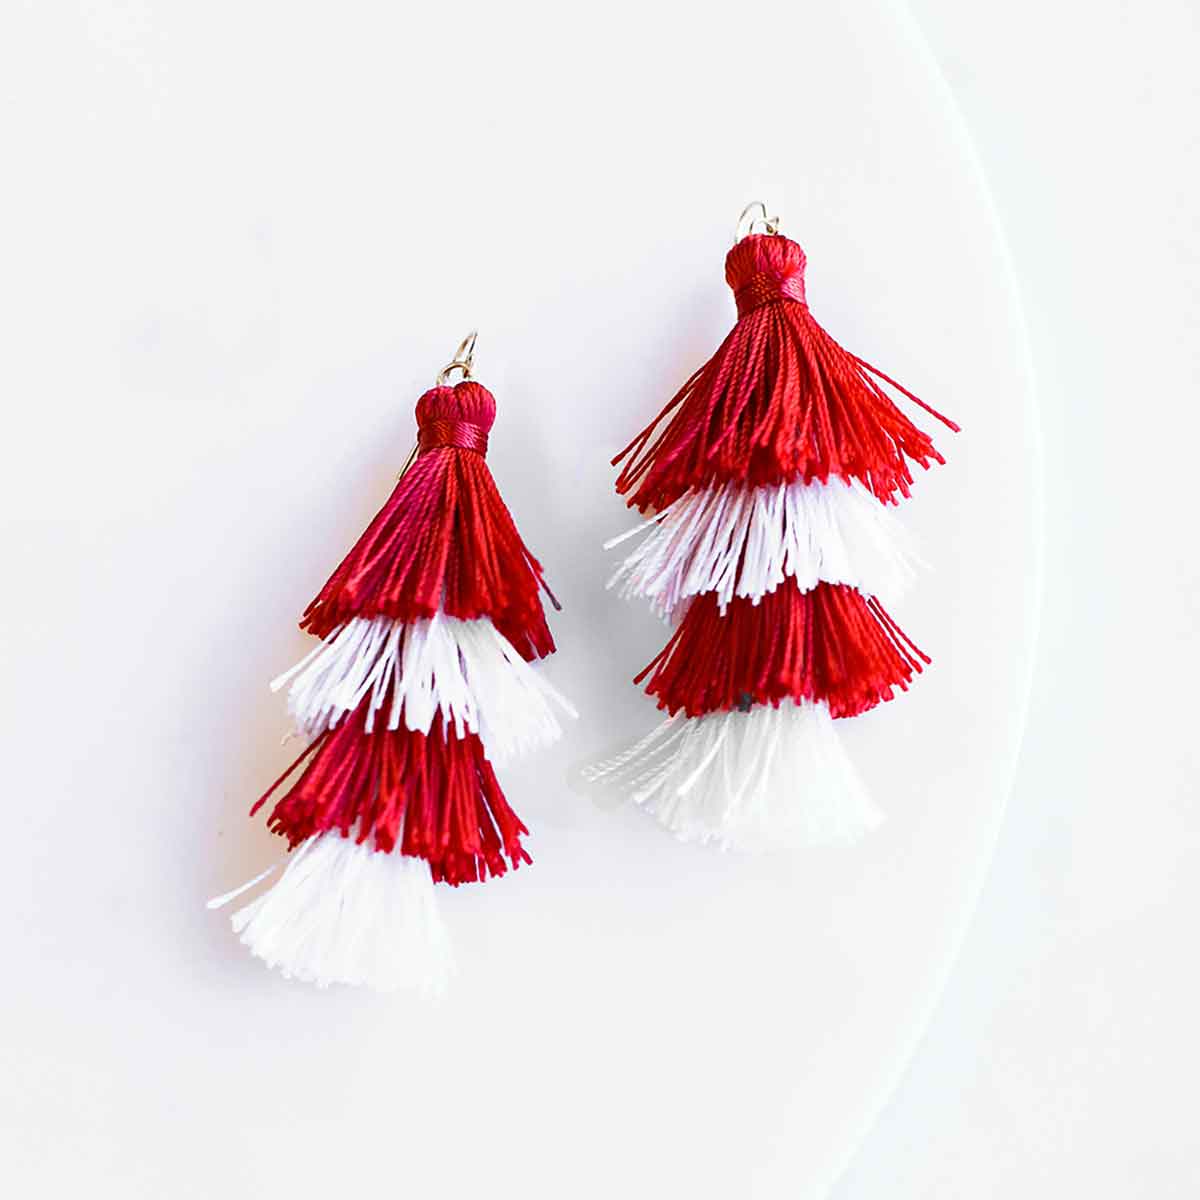 Red and White Tassel Earrings